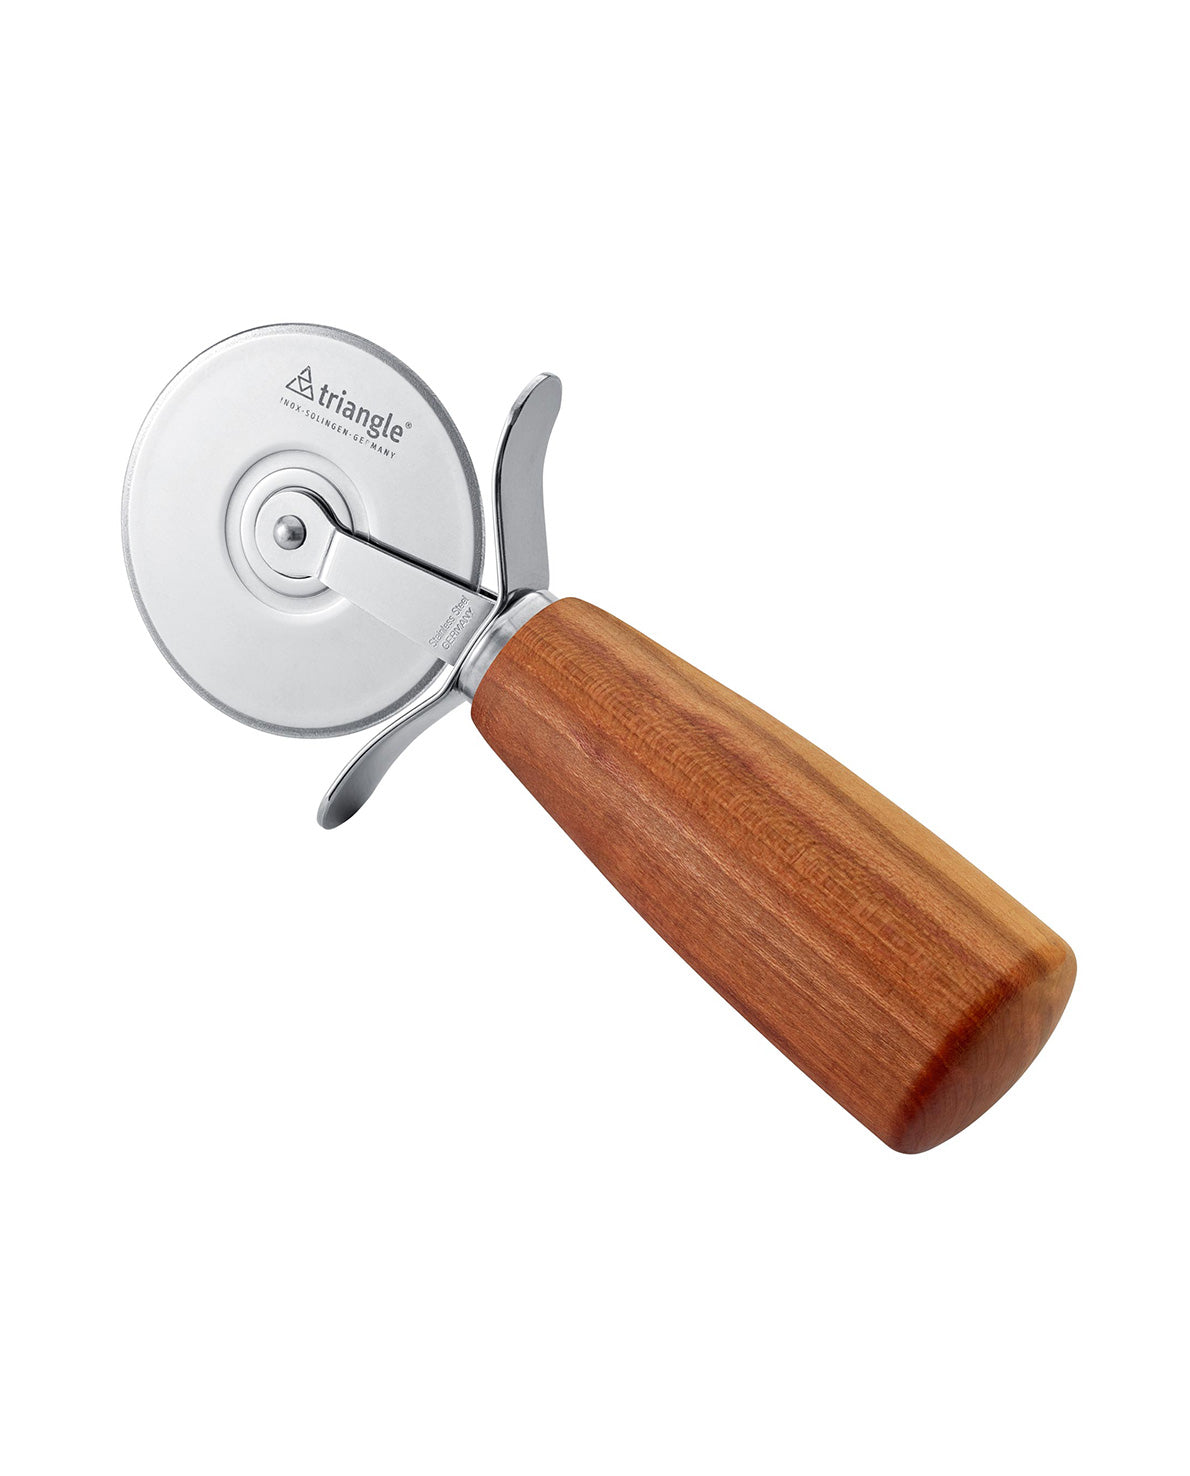 Pizza cutter, plum wood handle